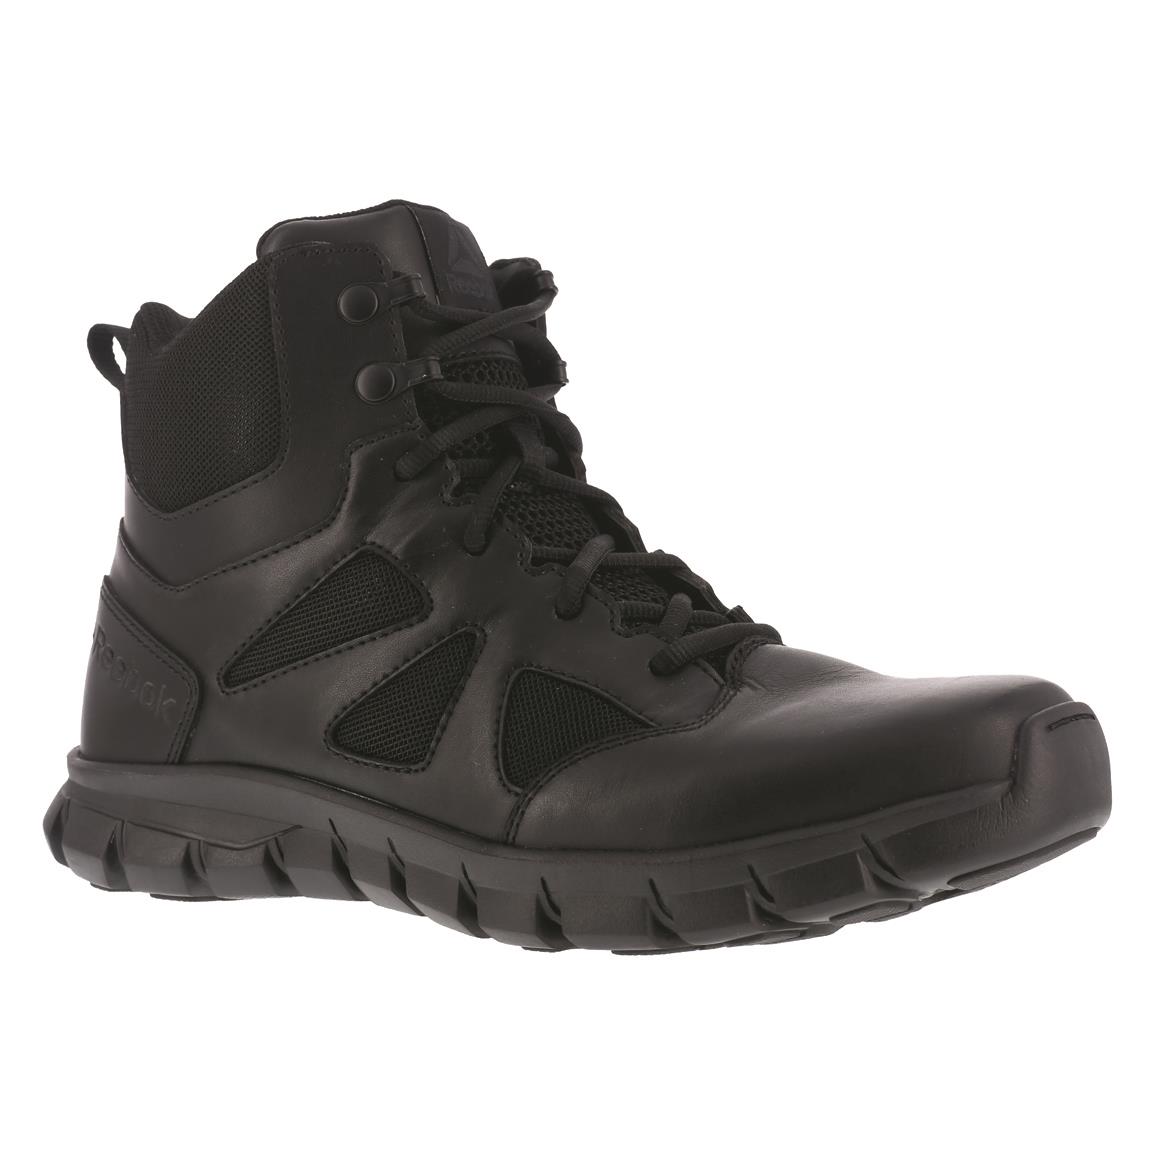 Reebok 6" Sublite Cushion Men's Tactical Boots, Black